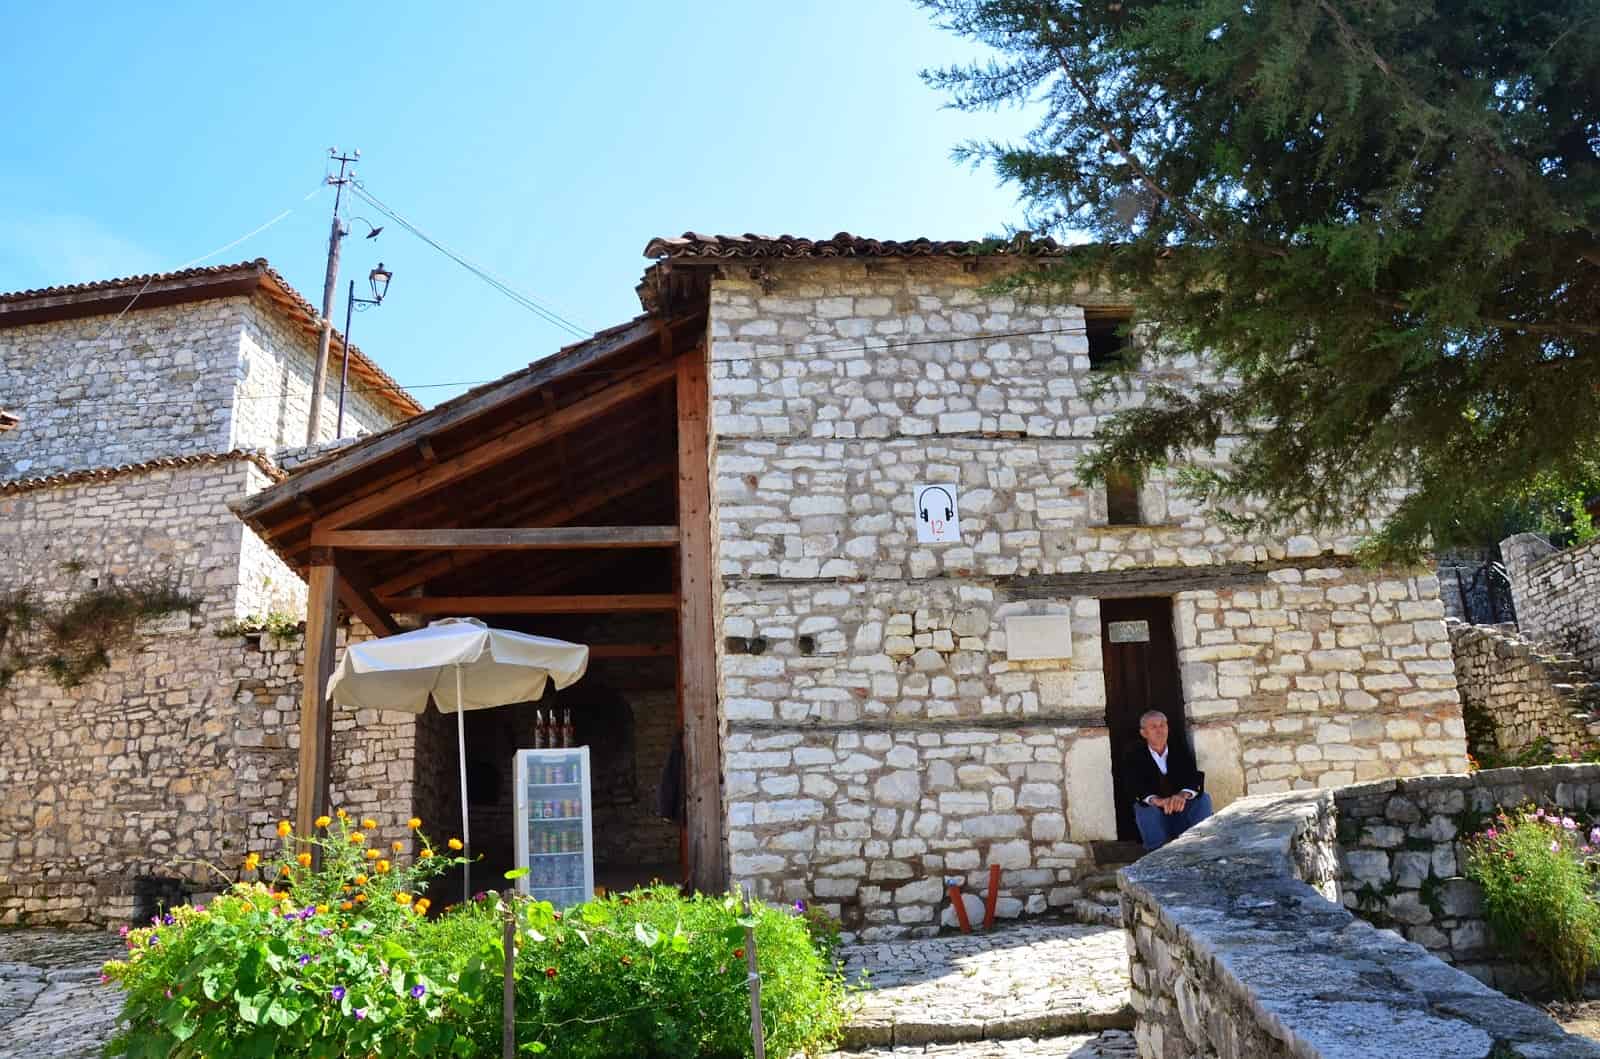 Church of St. Nicholas in Berat, Albania